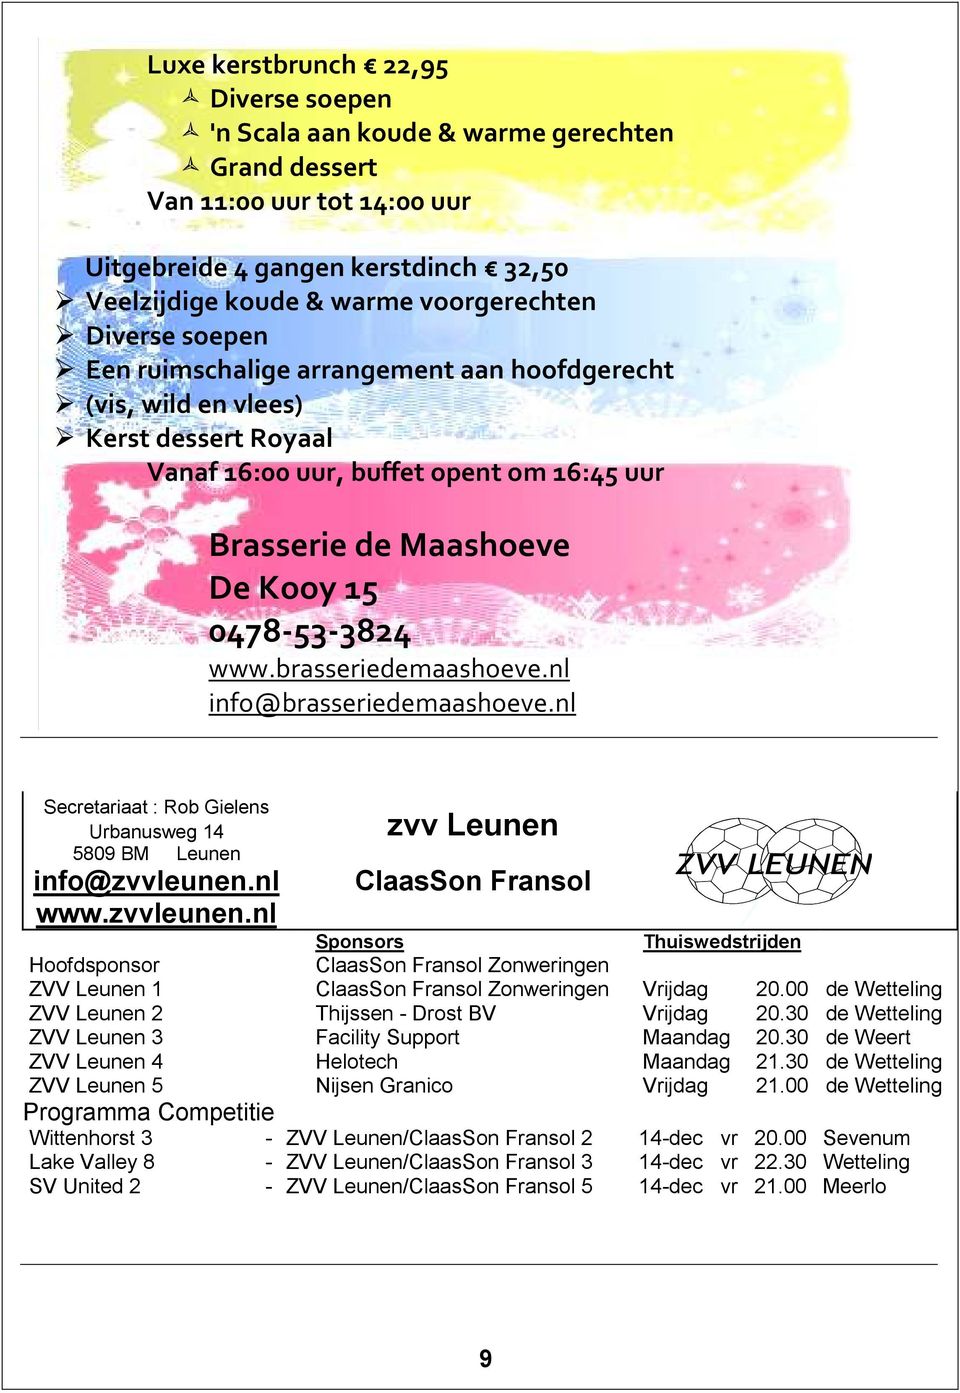 brasseriedemaashoeve.nl info@brasseriedemaashoeve.nl Secretariaat : Rob Gielens Urbanusweg 14 5809 BM Leunen info@zvvleunen.